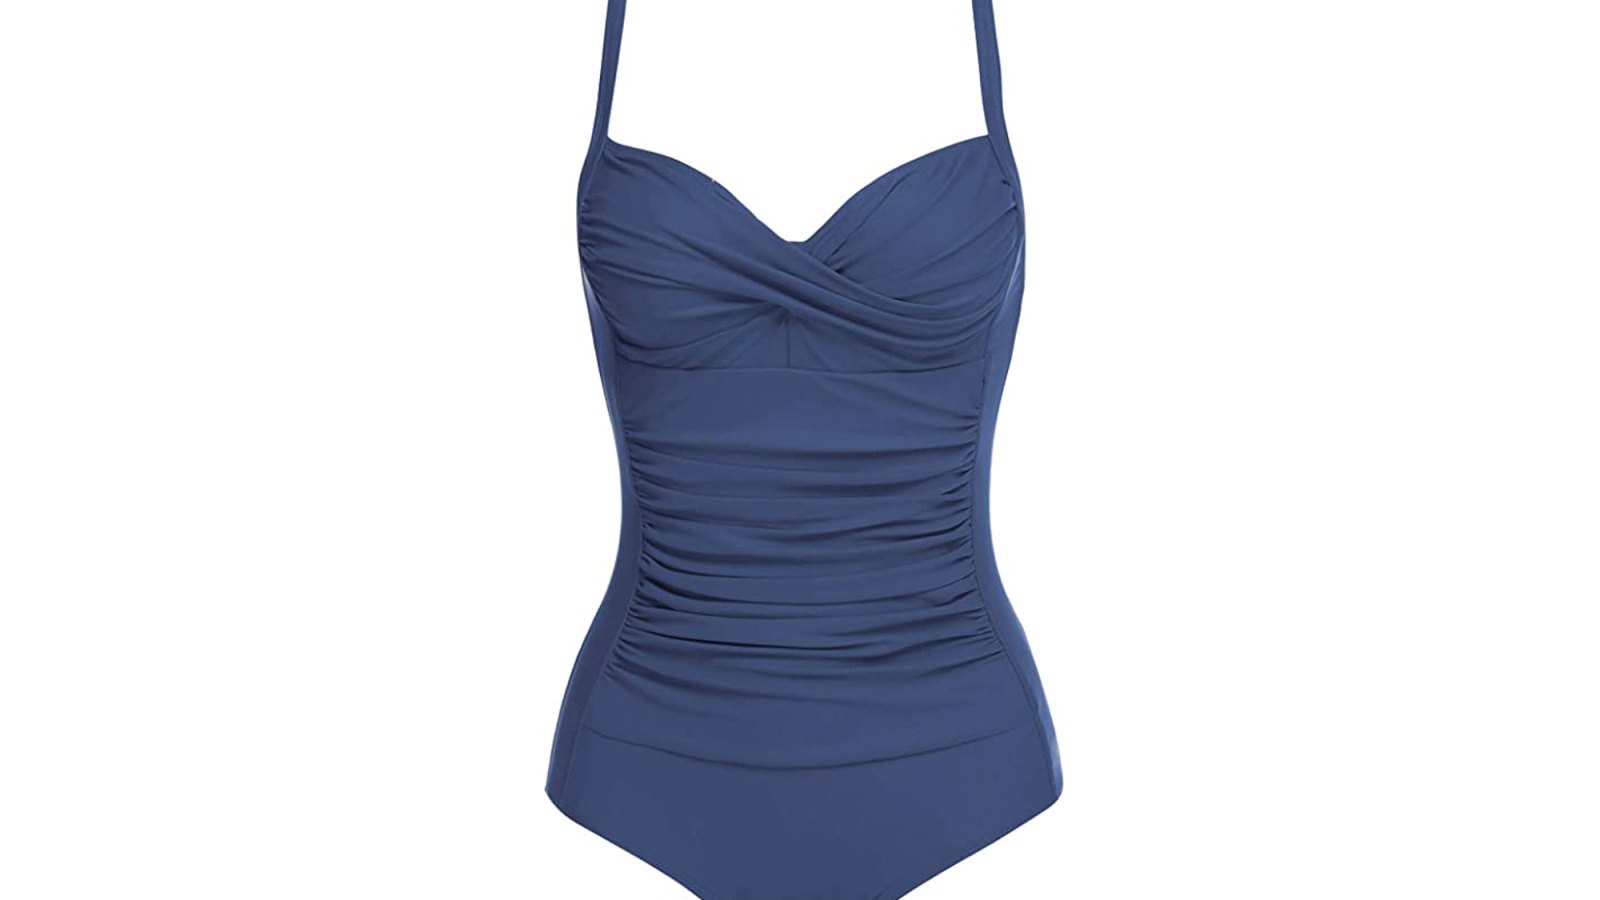 https://www.usmagazine.com/wp-content/uploads/2021/05/Ekouaer-Womens-One-Piece-Vintage-Pin-up-Tummy-Control-Shirred-Bathing-Suit.jpg?w=1600&h=900&crop=1&quality=86&strip=all